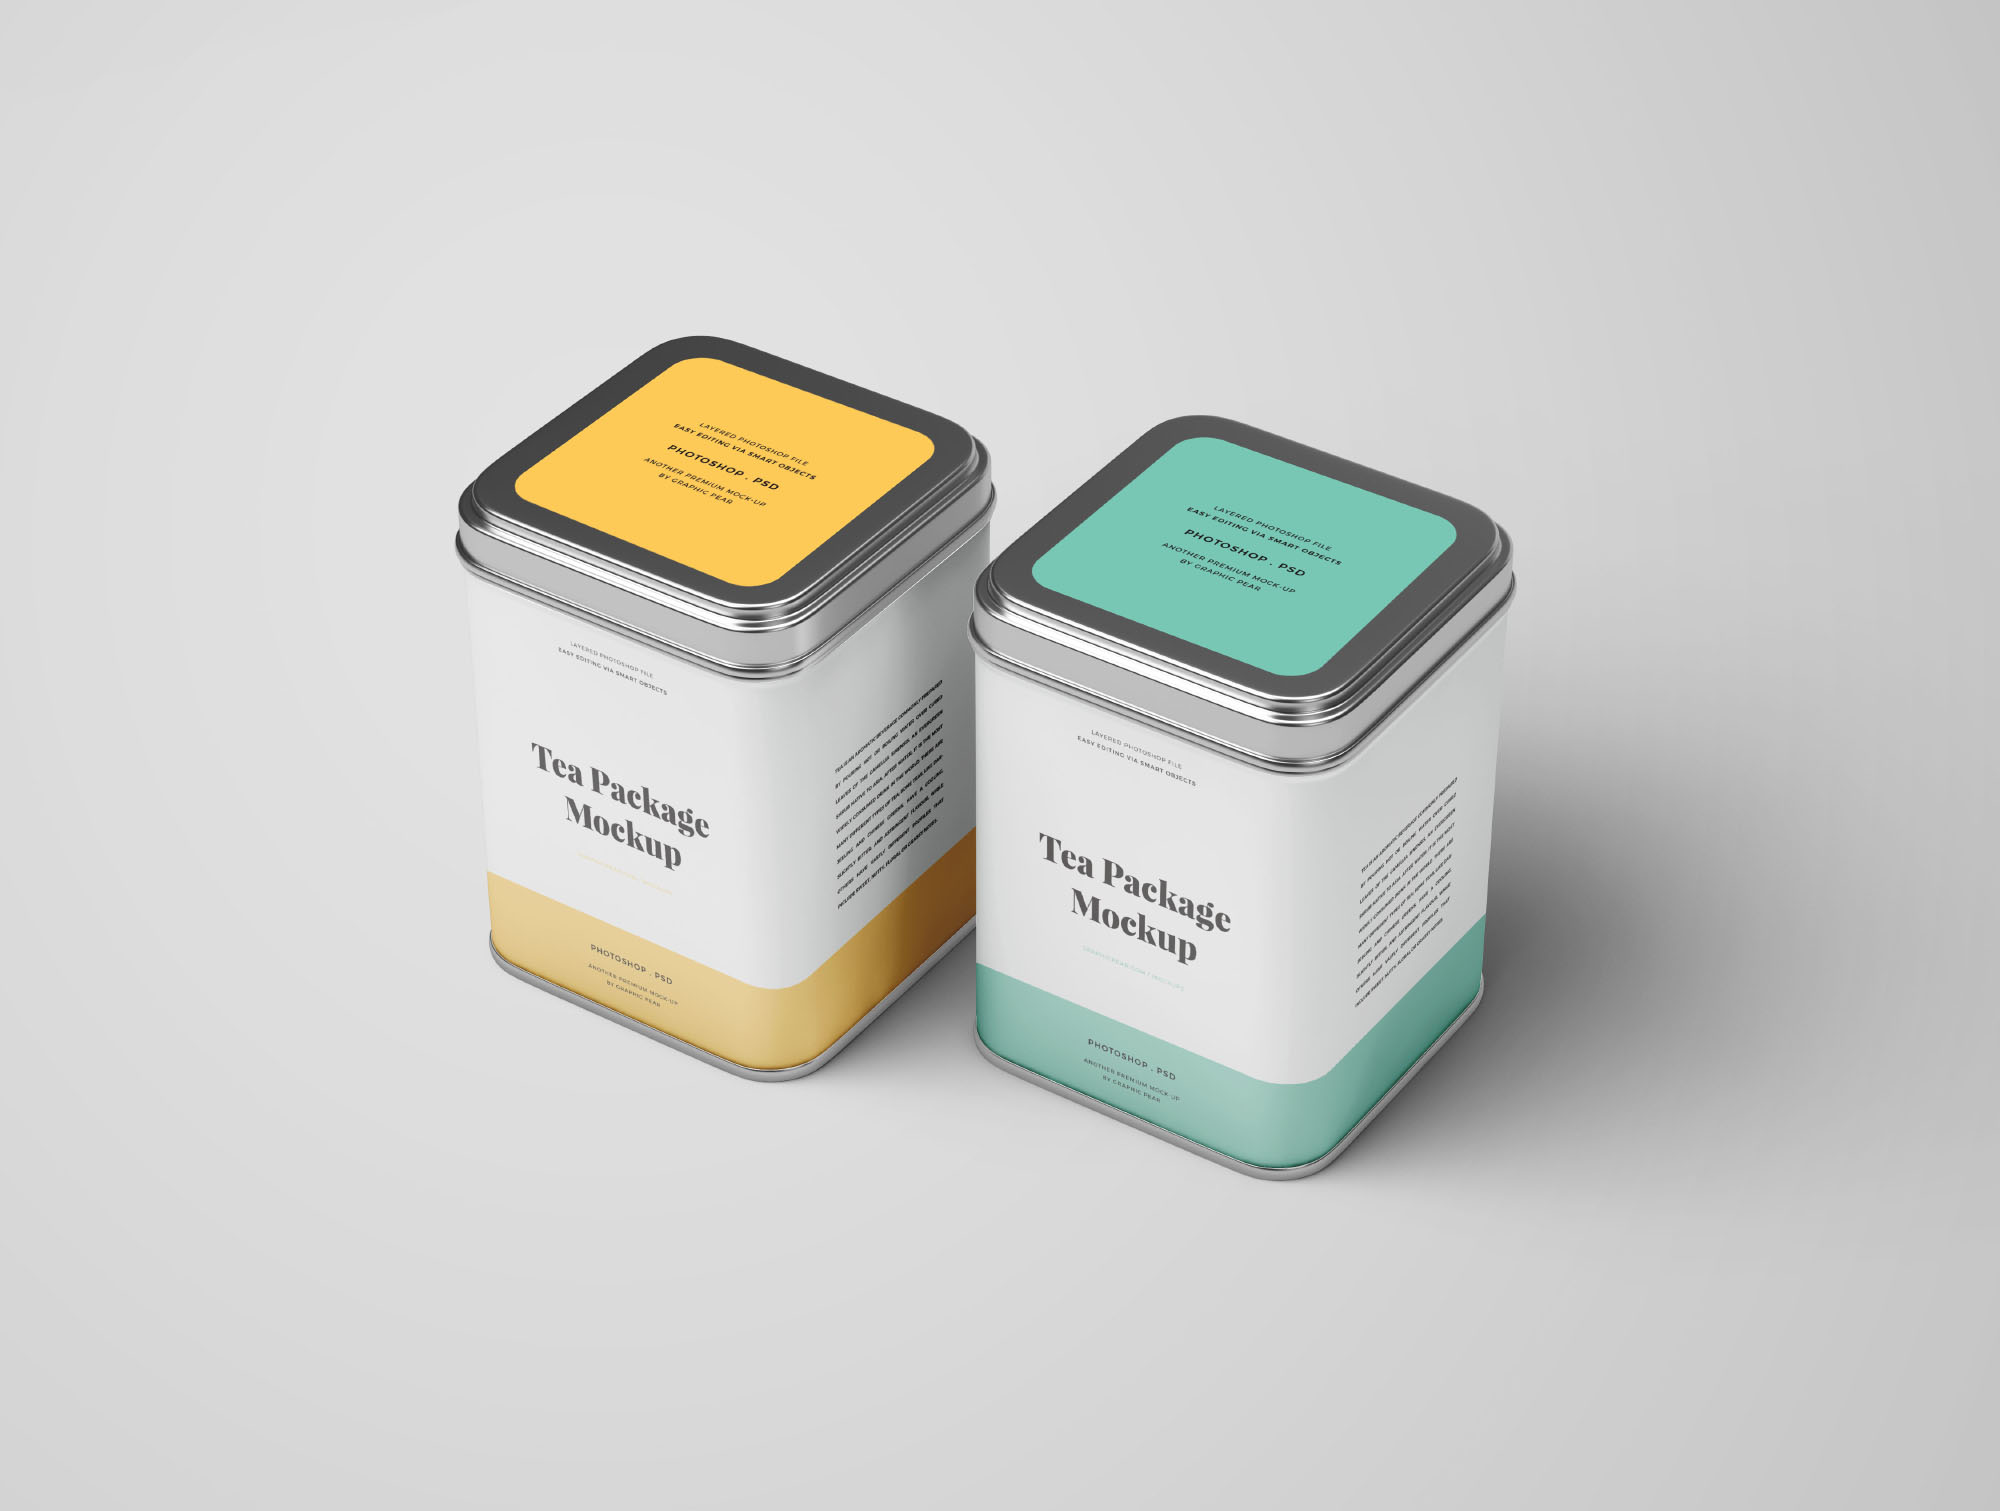 茶叶铁盒包装设计效果样机 Tea Package Mockup插图(6)